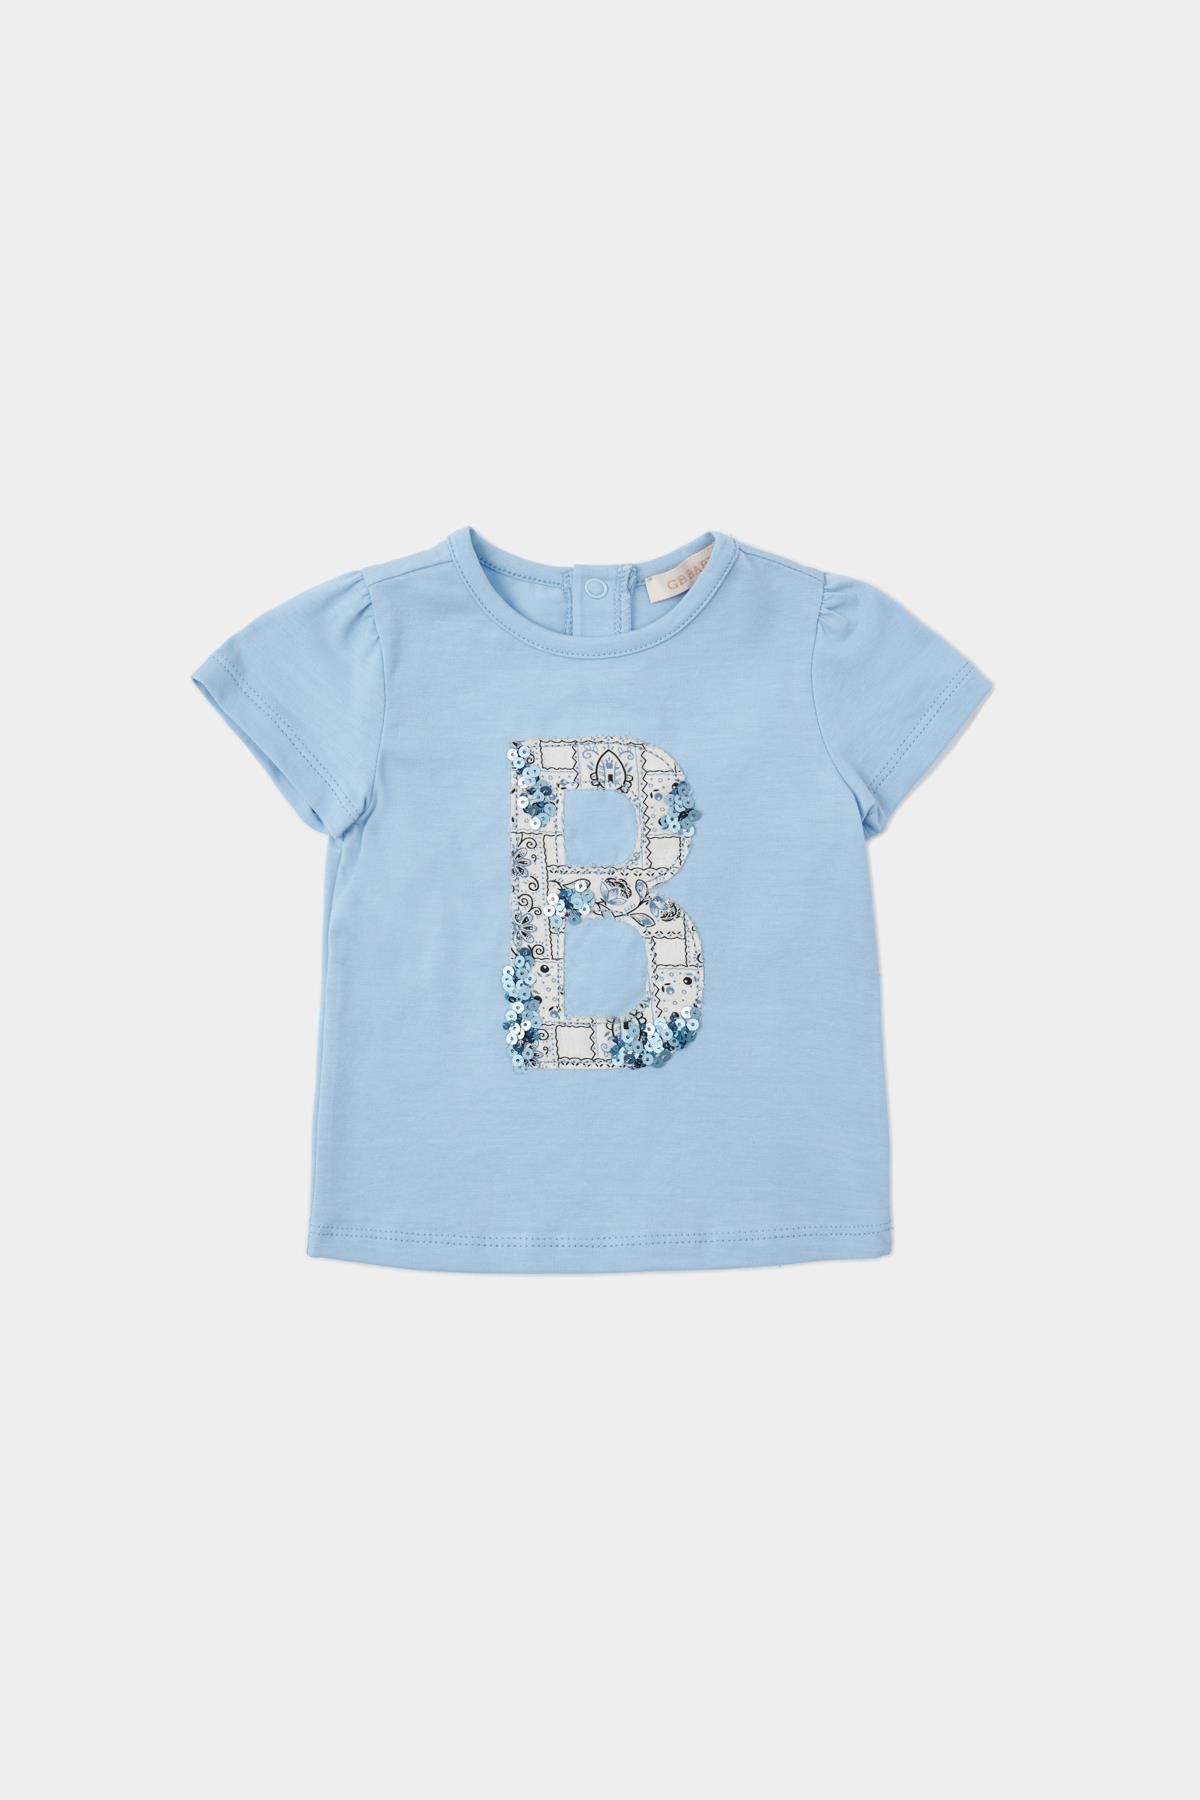 GB Baby Bg Store Kız Bebek Mavi Tshirt 23pssbg2511